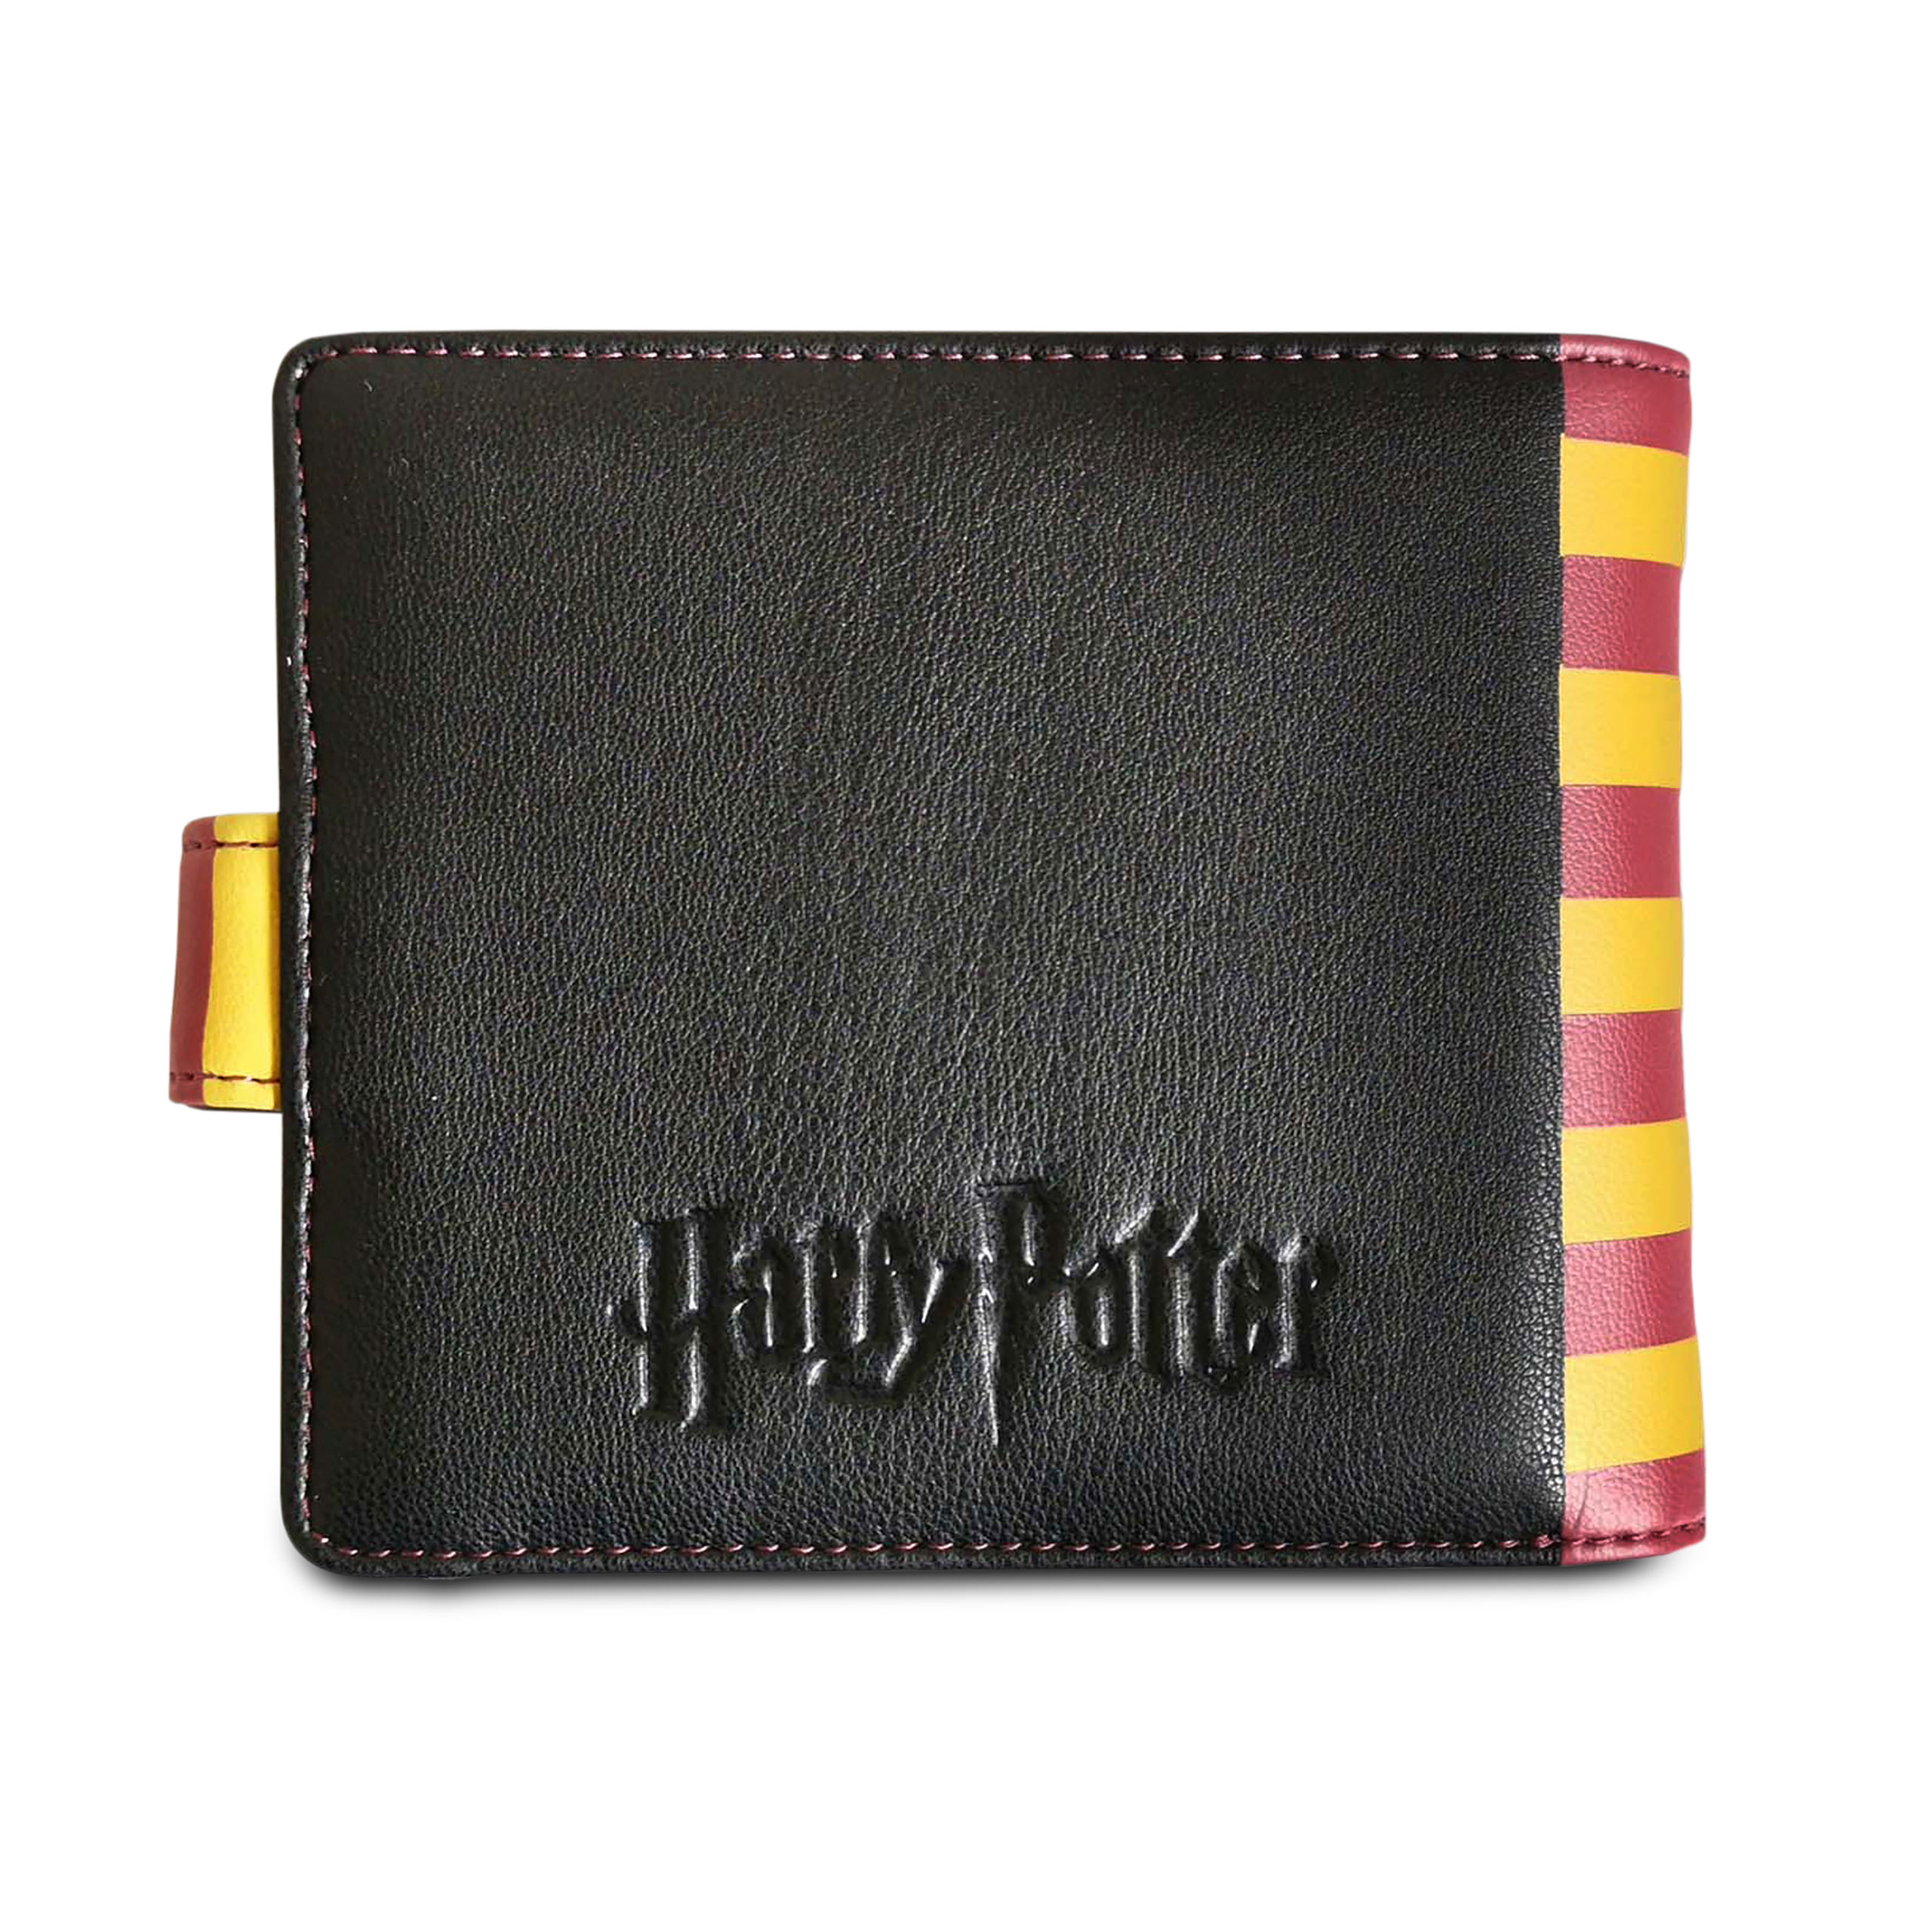 Harry Potter - Hogwarts & Stripes Geldbörse